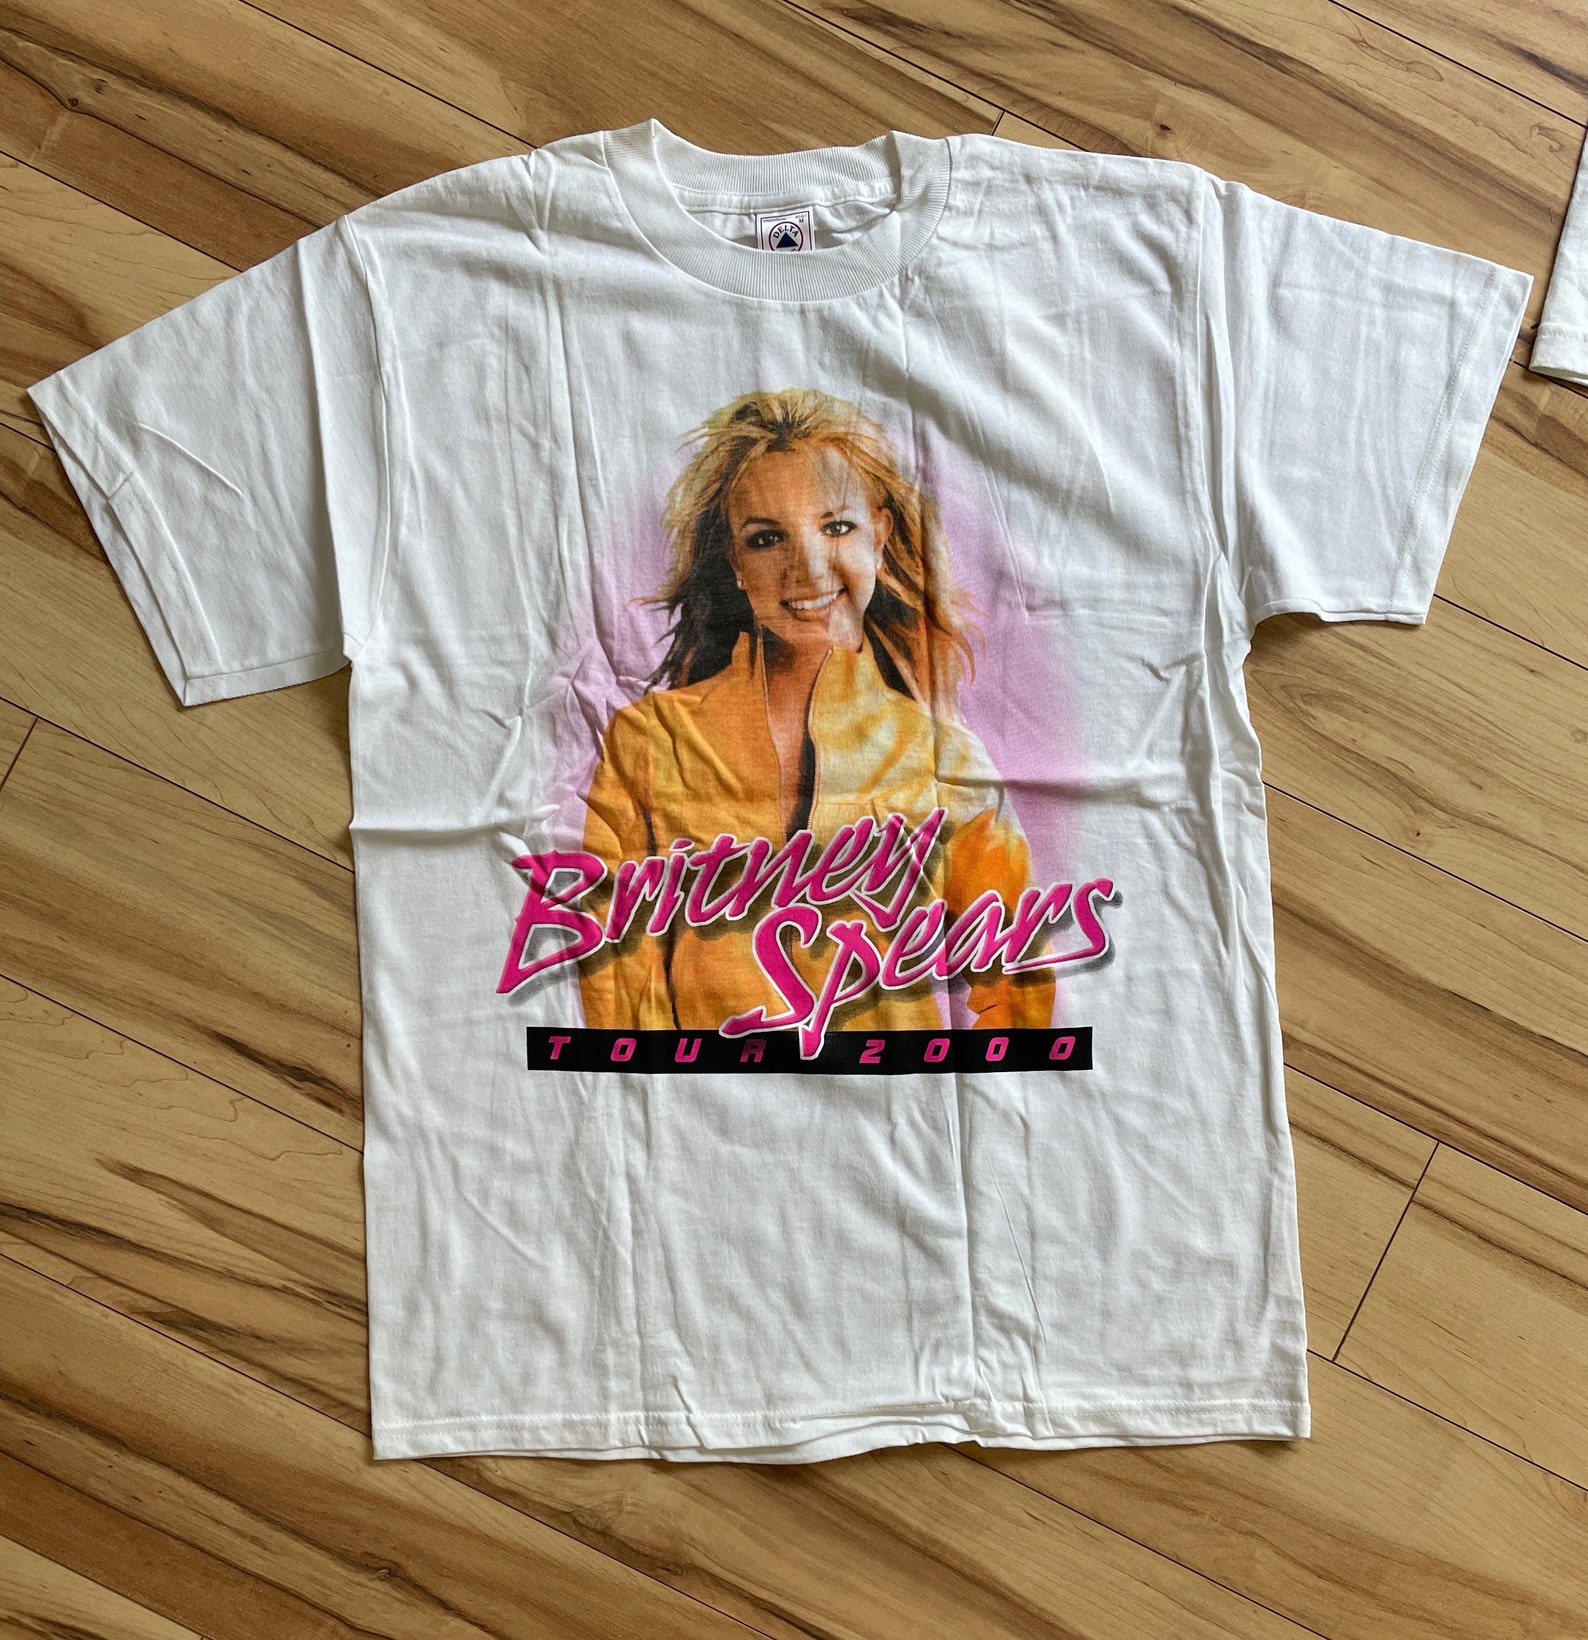 NOS Medium Britney Spears 2000 Tour T-shirt | Etsy